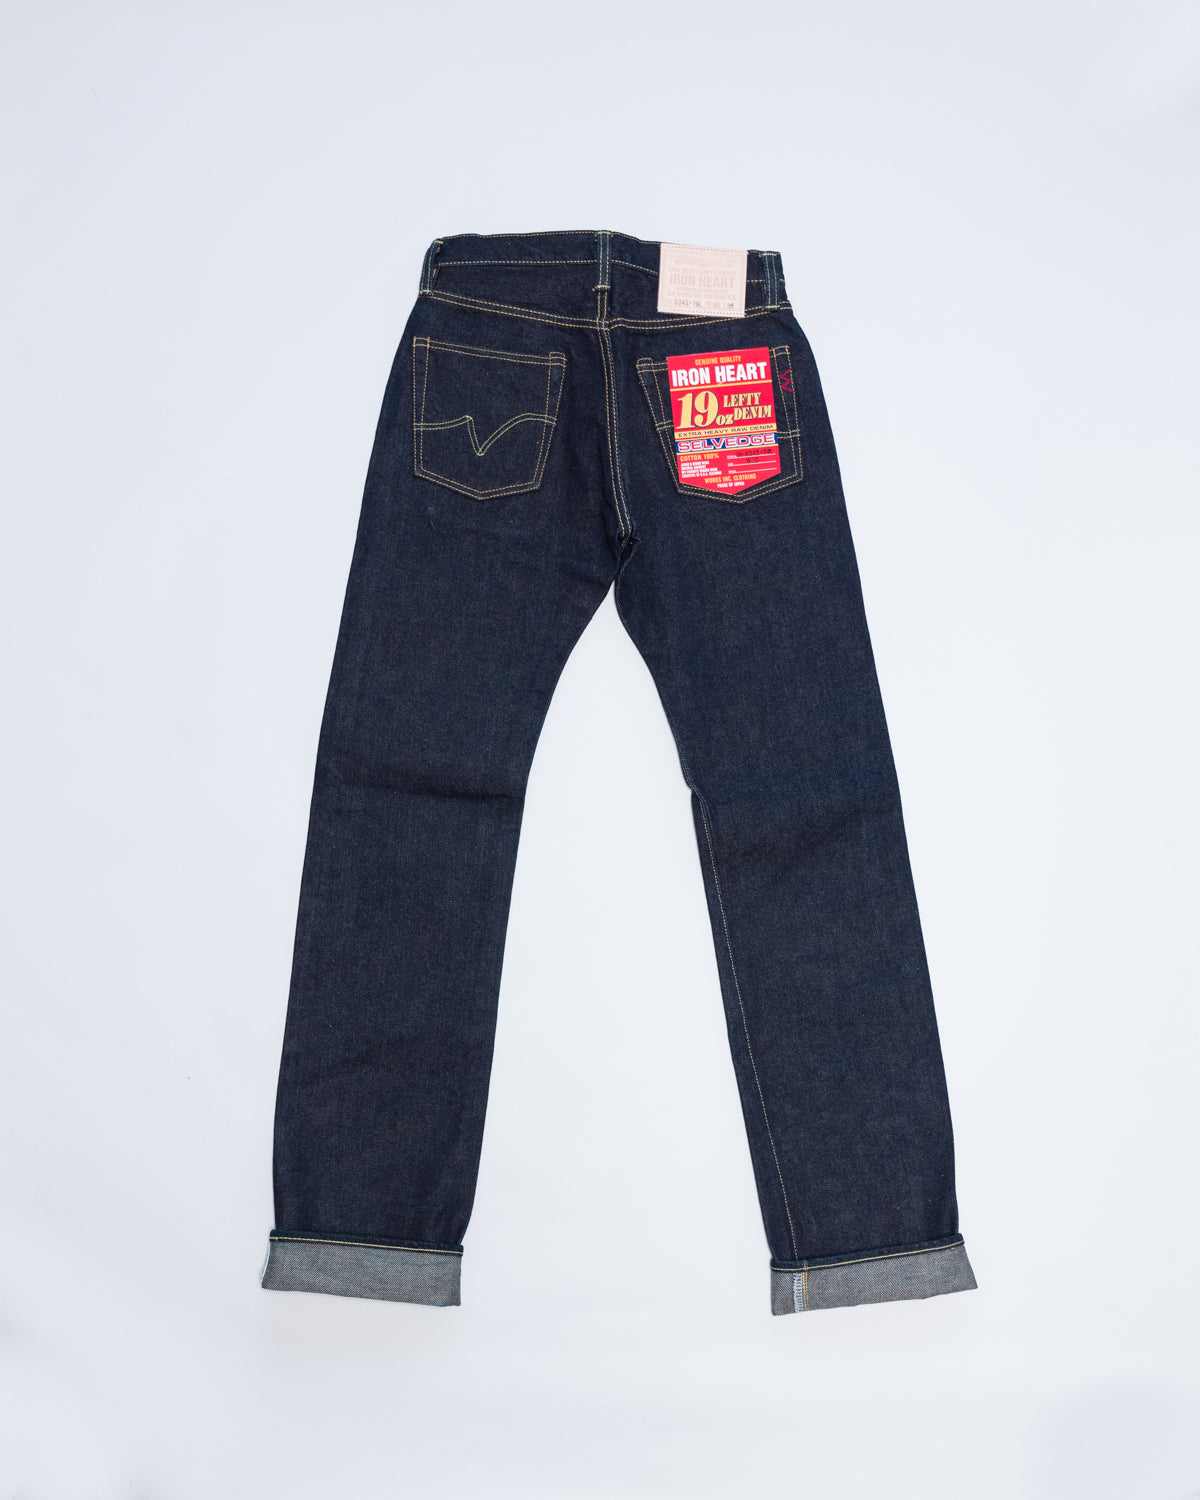 IH-634S-19L - 19oz Left Hand Twill Selvedge Denim Straight Cut Jeans - Indigo